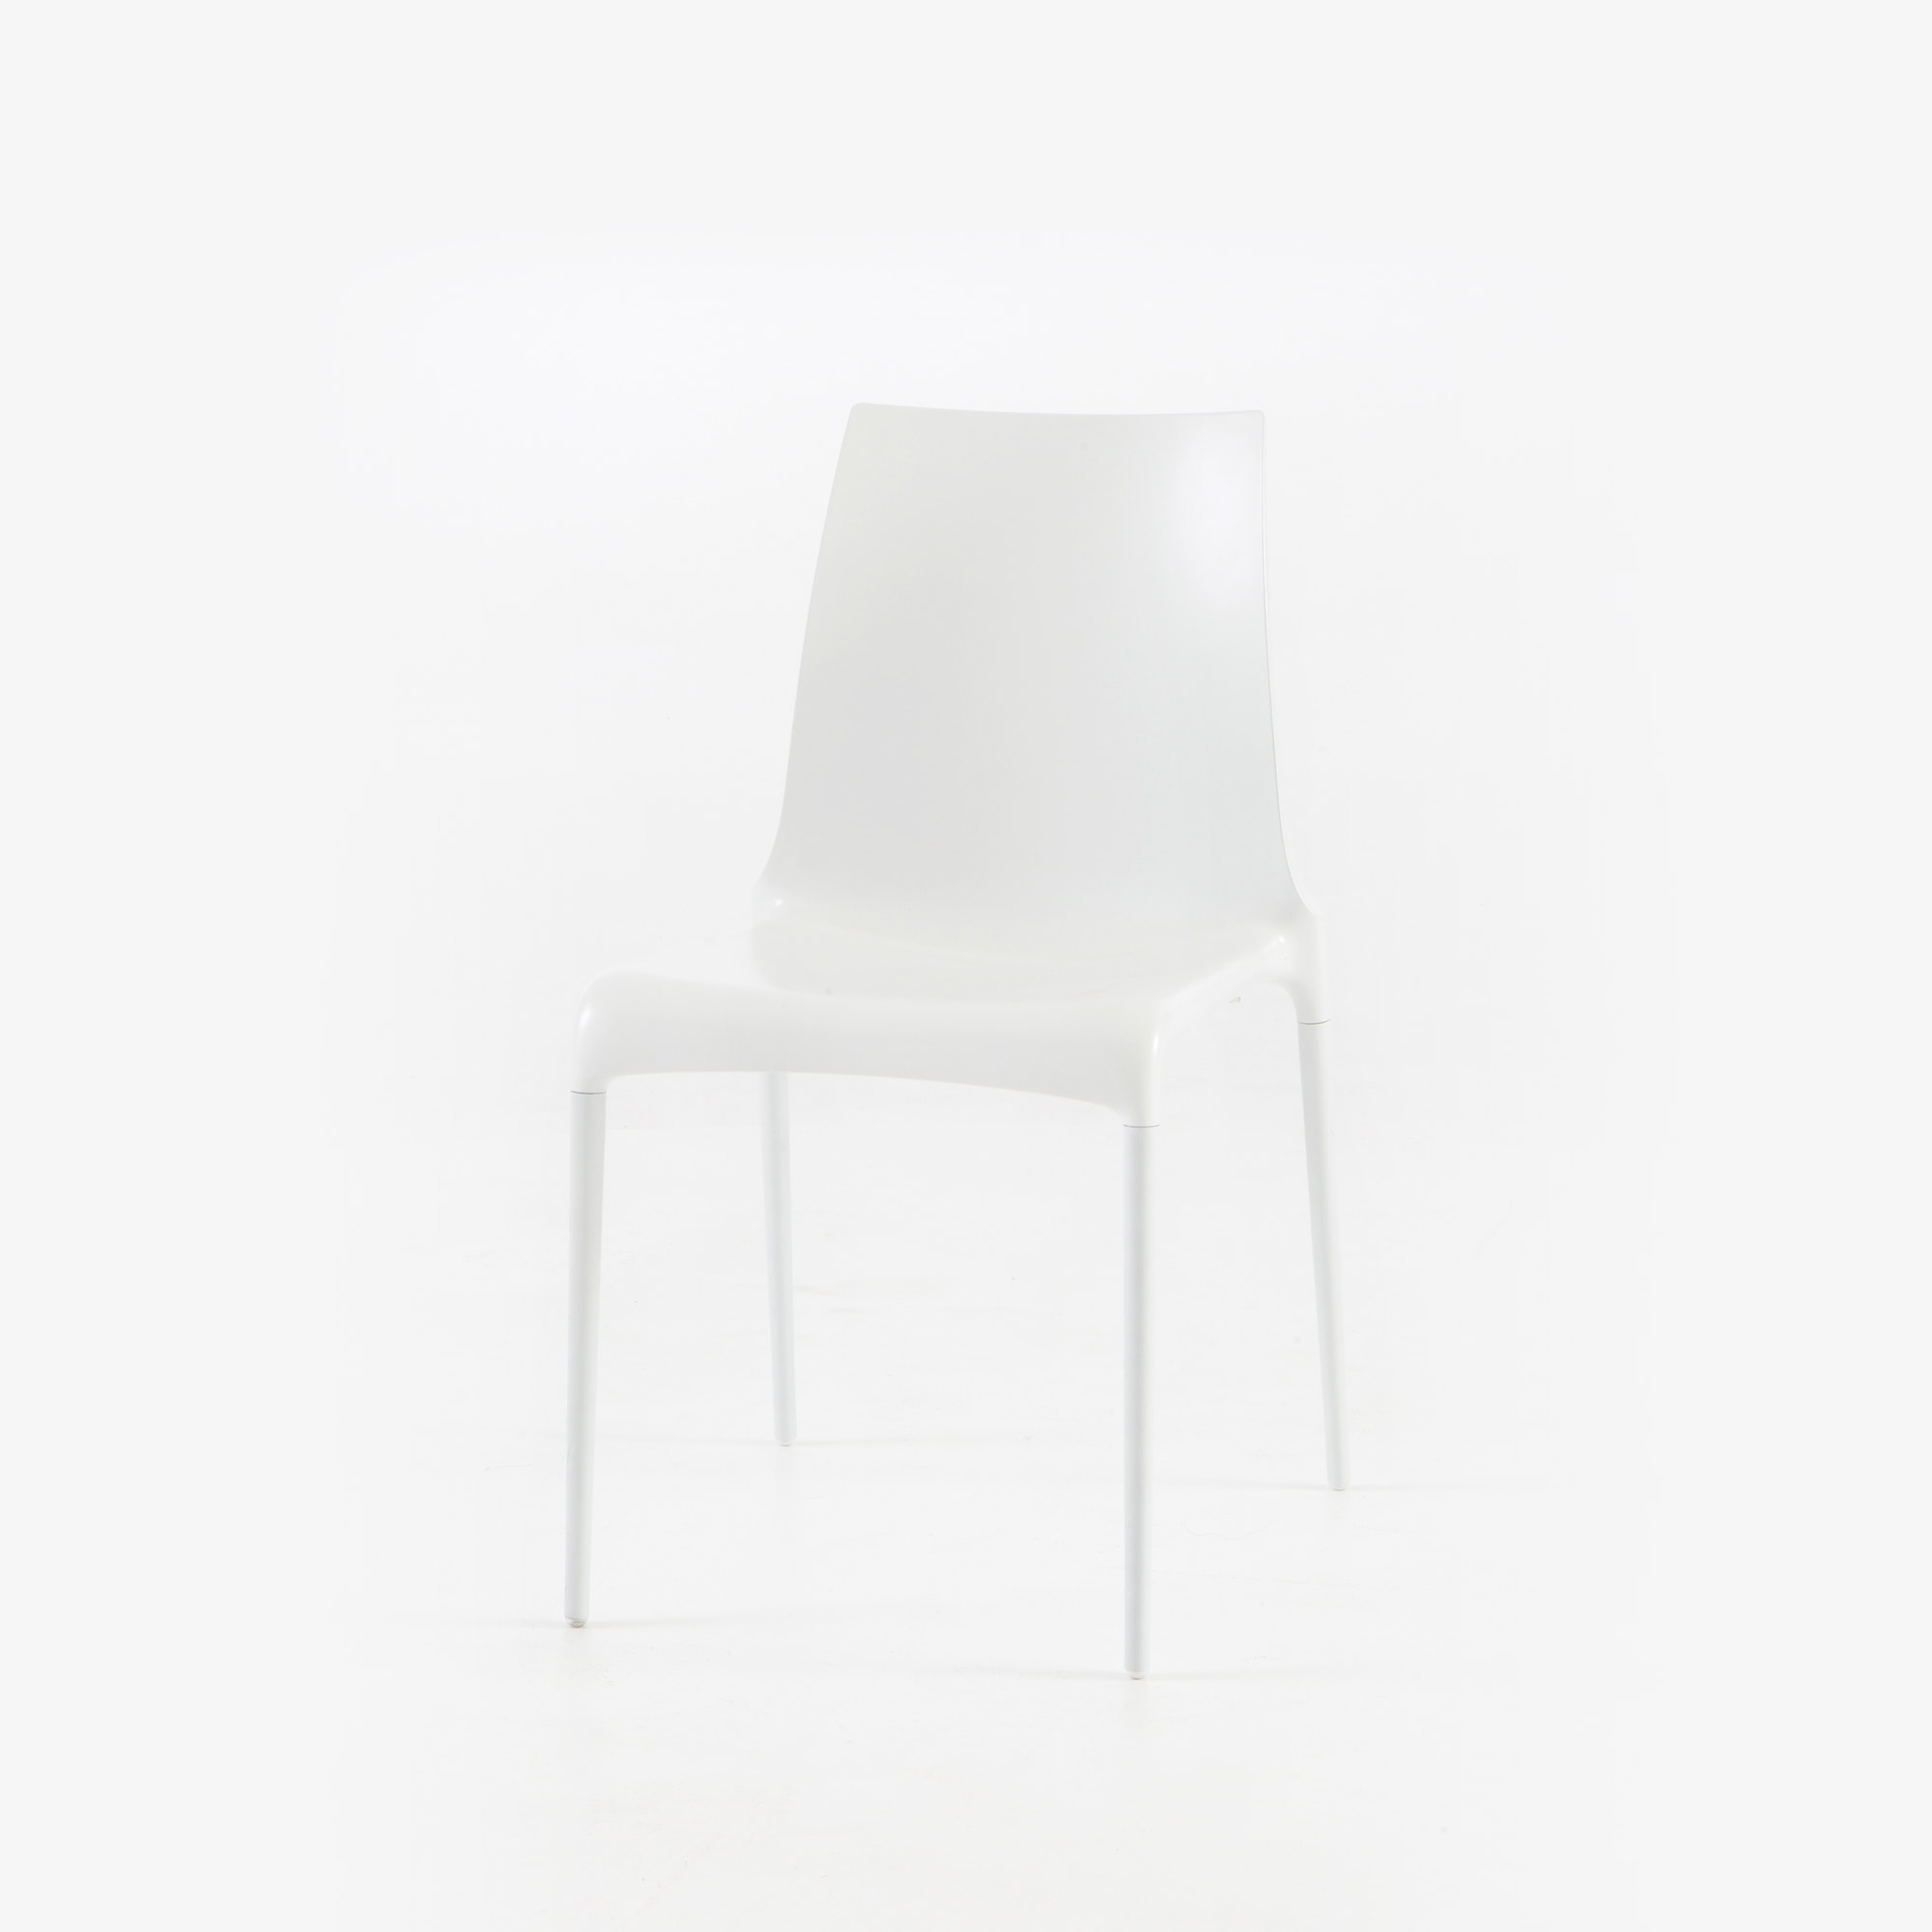 Image 椅子 白色 室内/户外 3